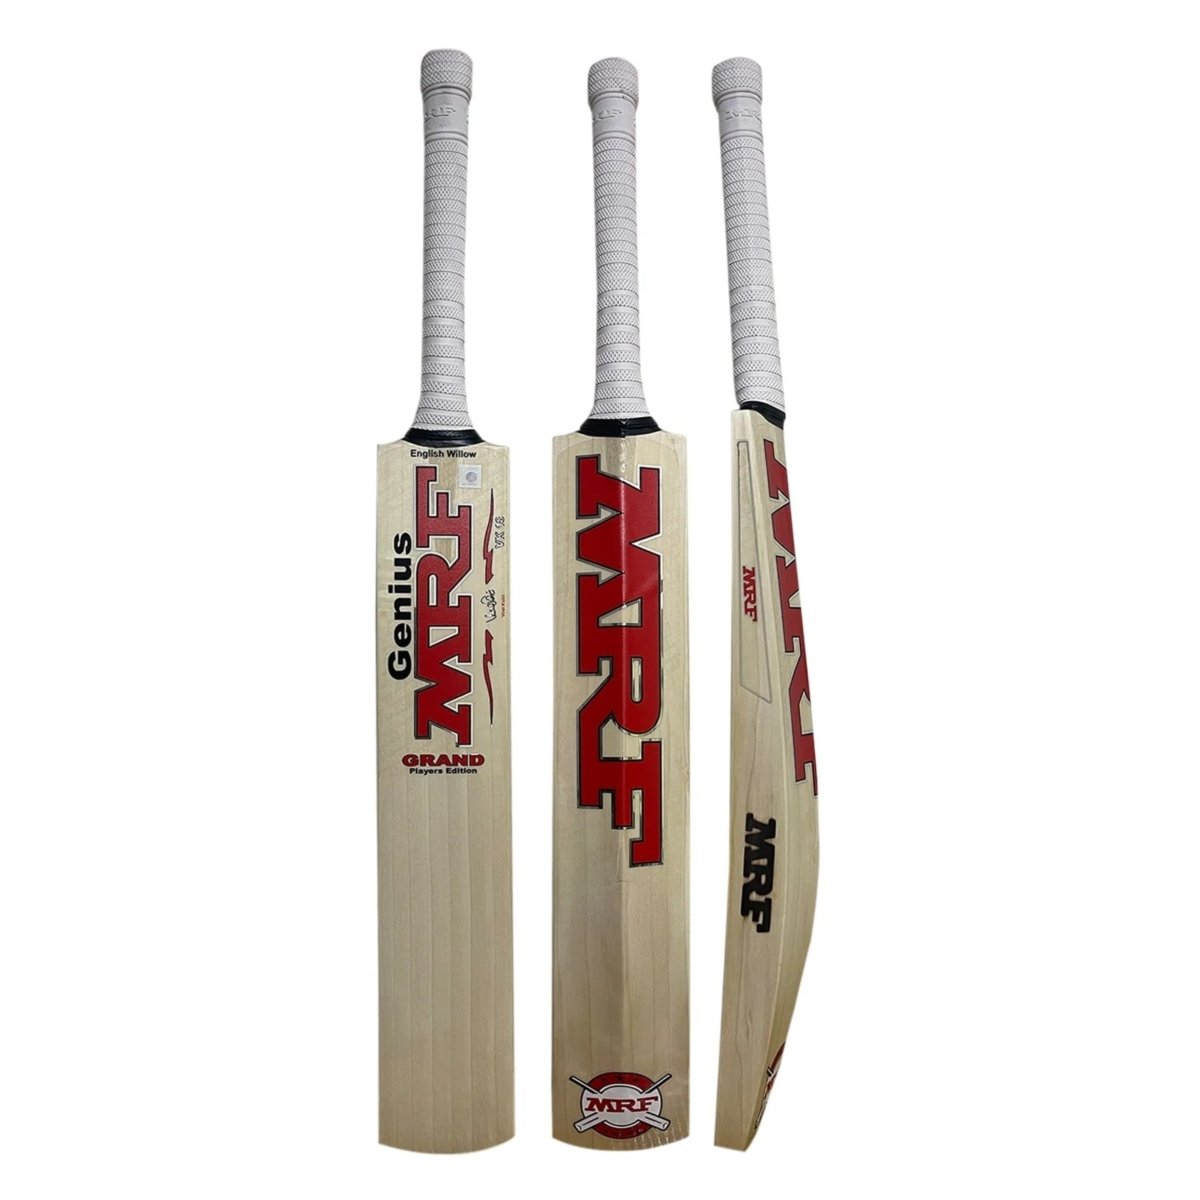 MRF Genius Grand Player Edition English Willow Cricket Bat - Acrux Sports